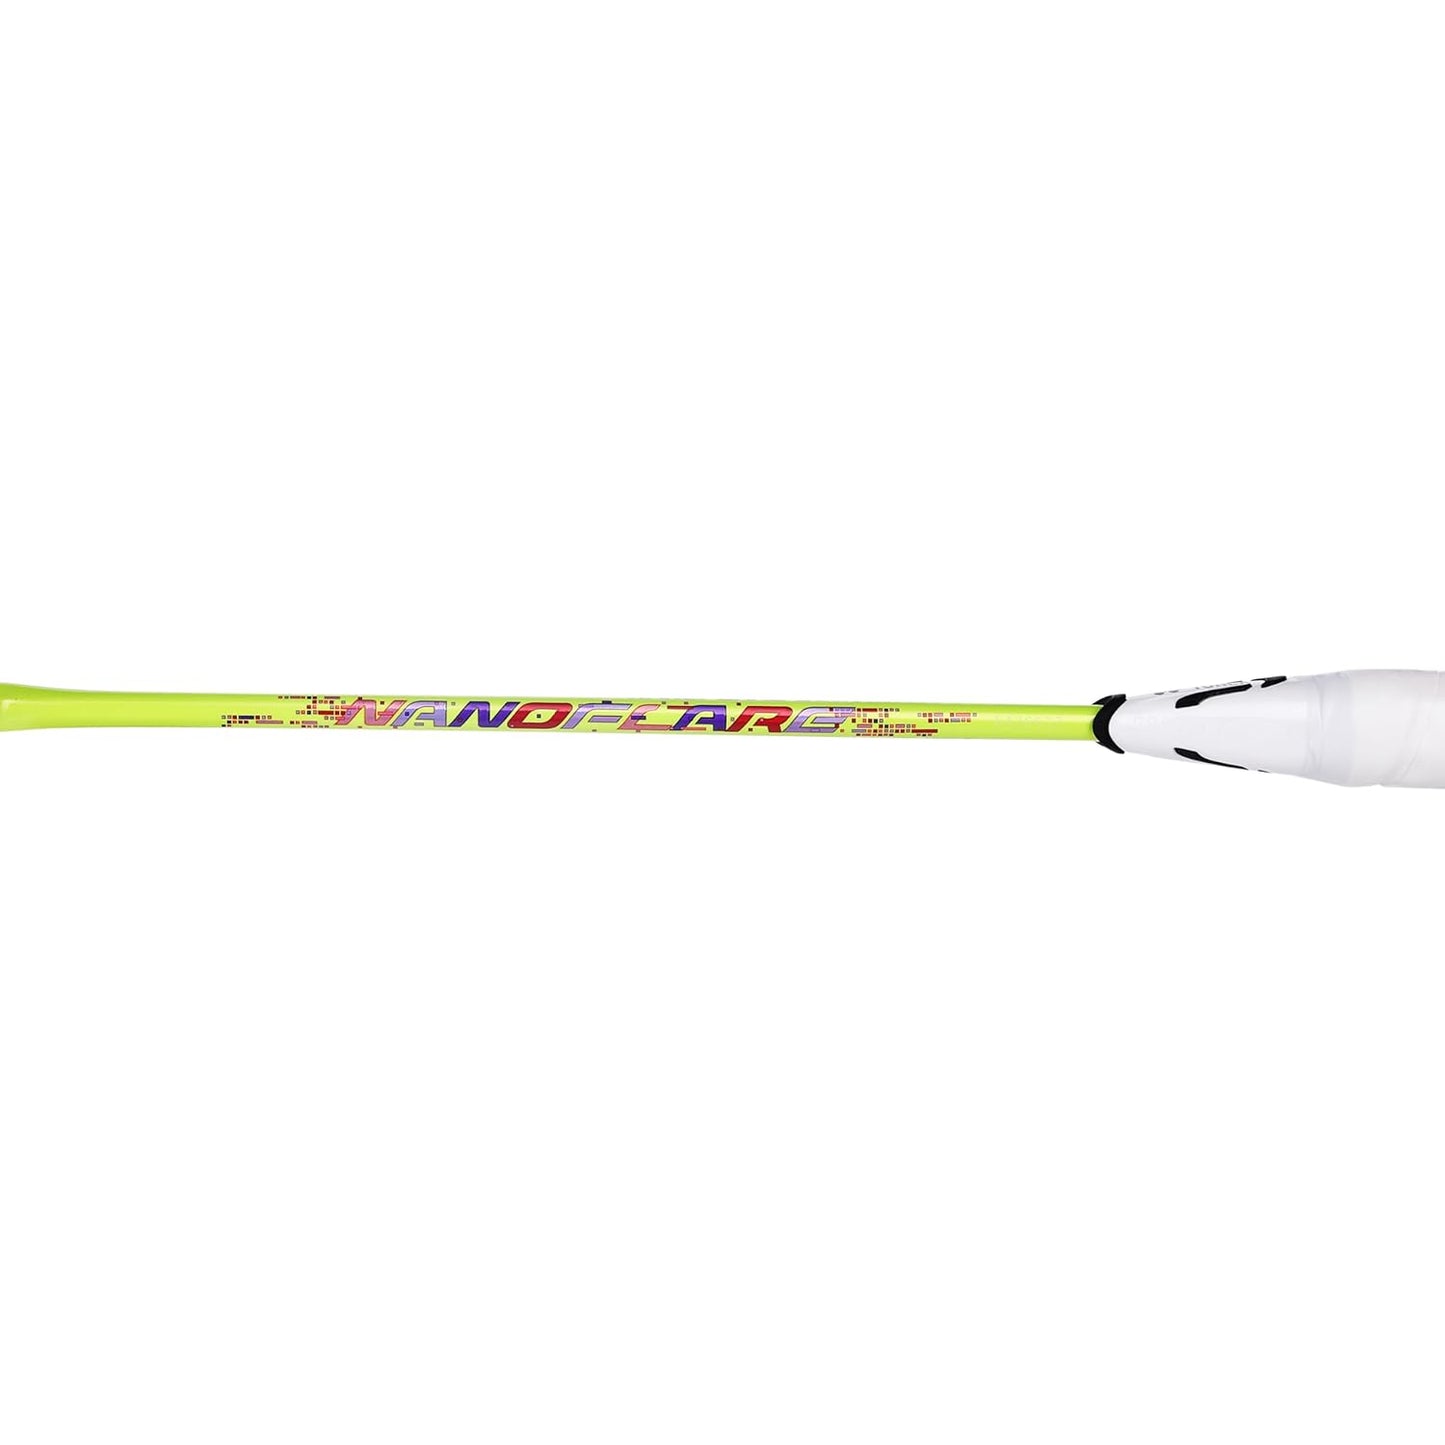 Yonex Nanoflare 002 Ability Strung Badminton Racquet, 4U4 - Lime - Best Price online Prokicksports.com